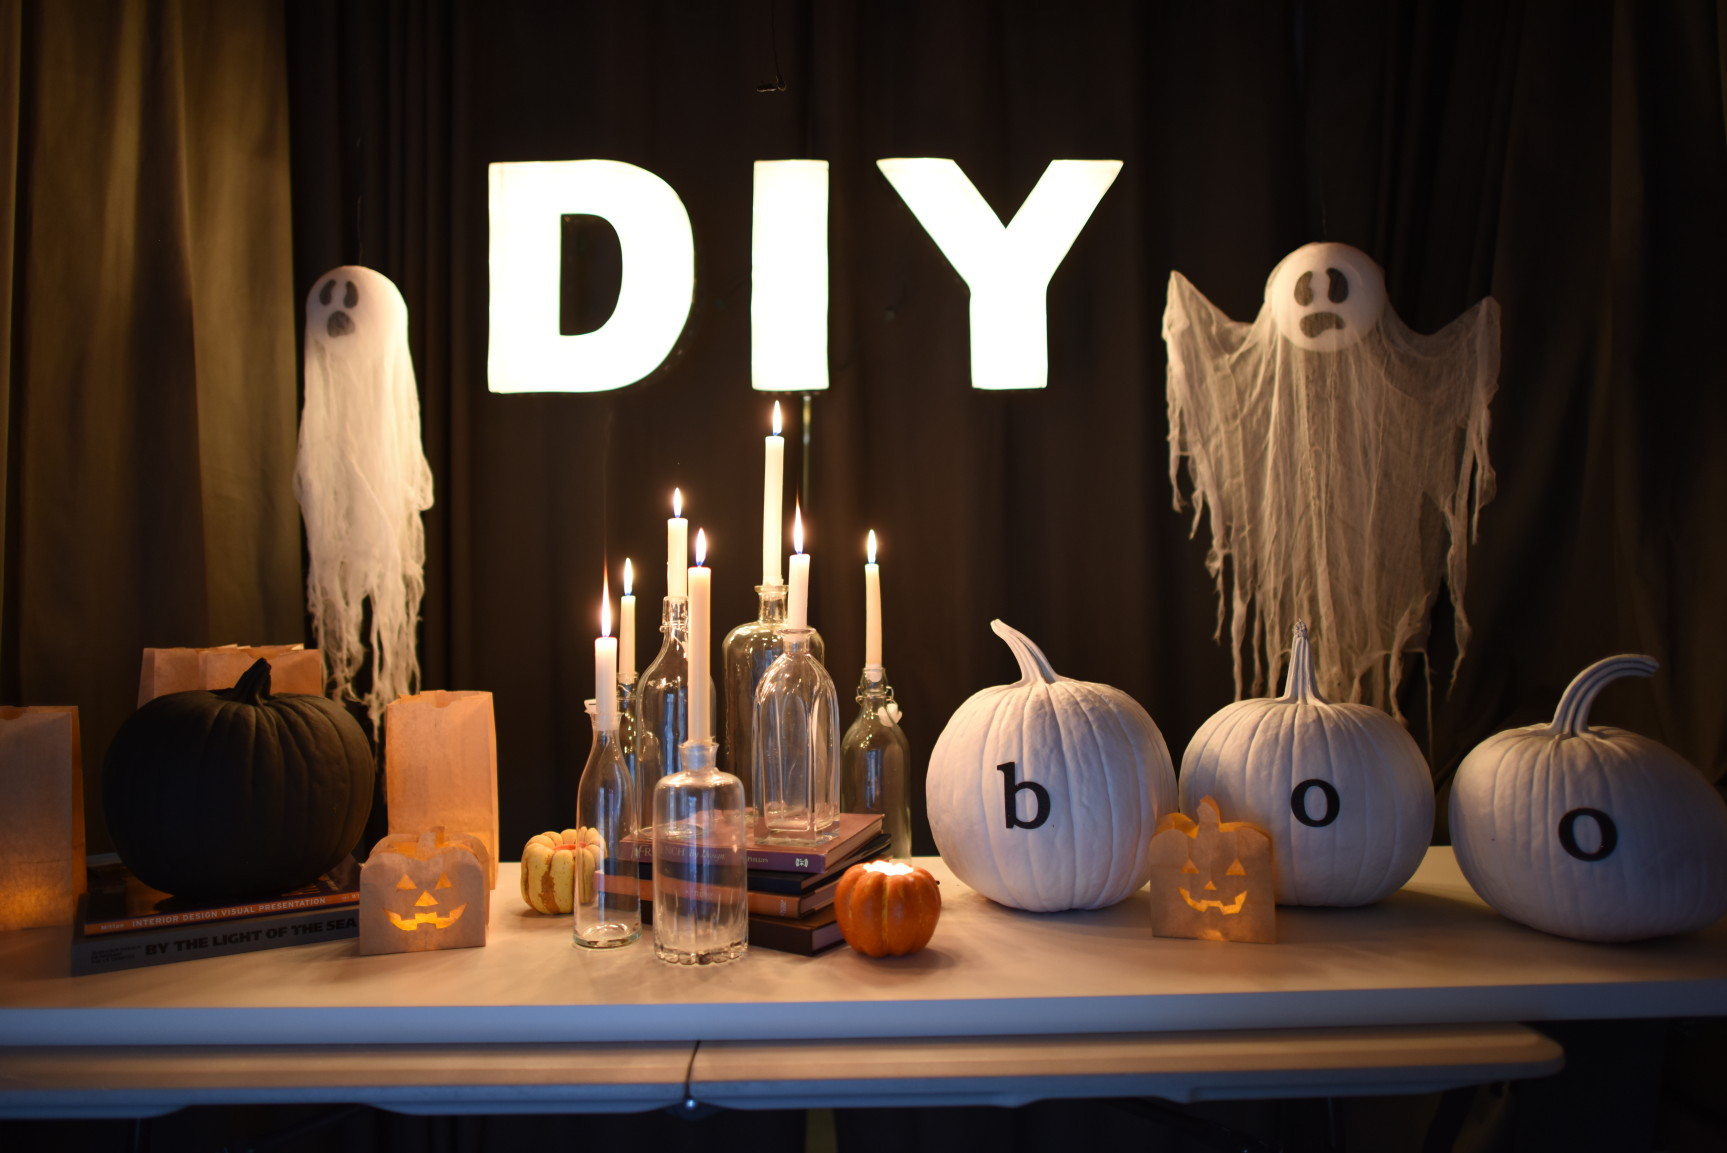 Creepy Halloween Party Ideas
 5 Easy Creepy Yet Classy Halloween Party Decorations [on a